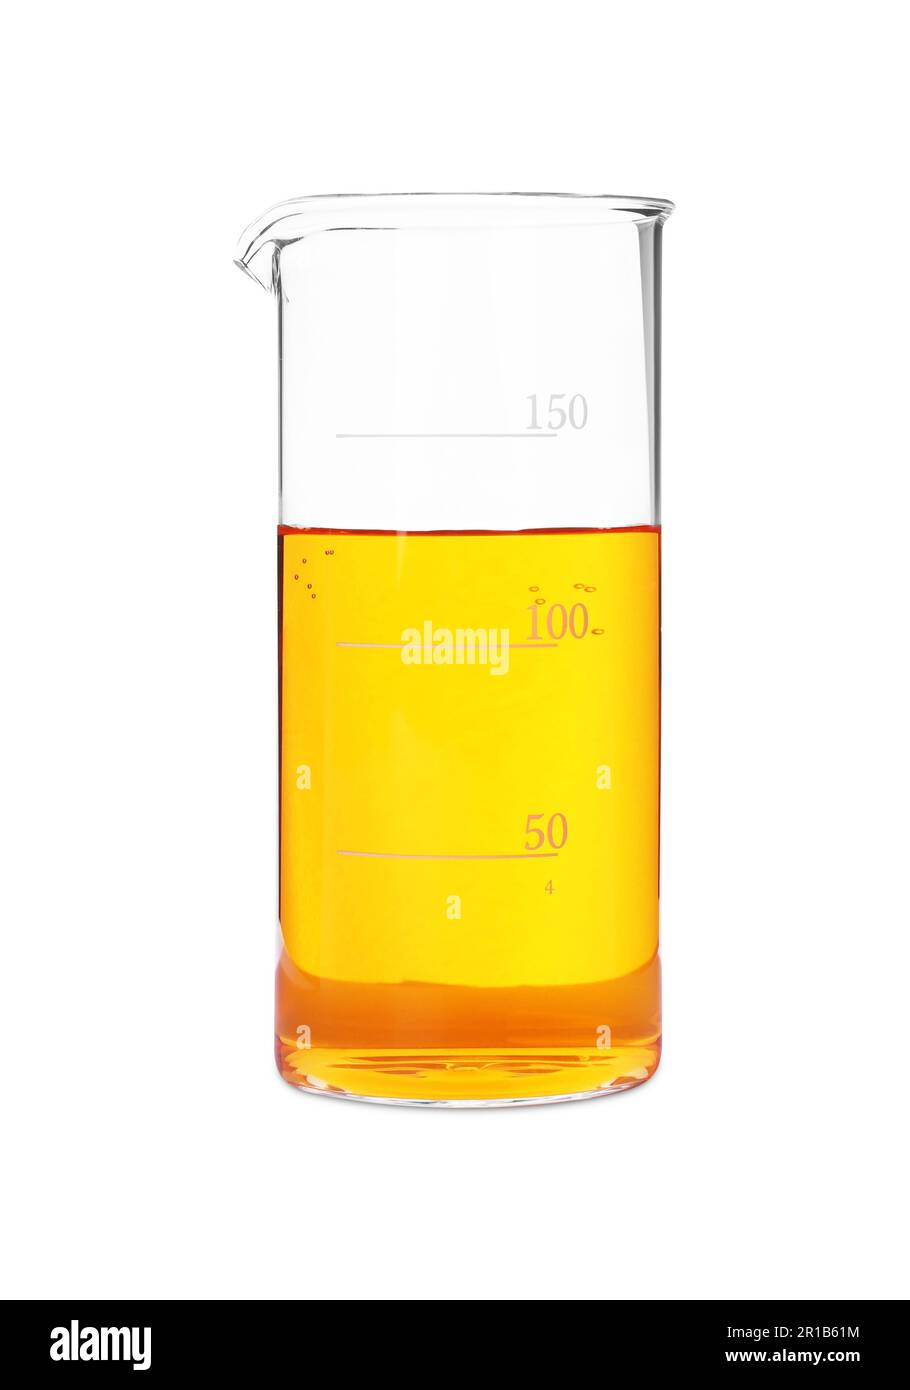 https://c8.alamy.com/comp/2R1B61M/glass-beaker-with-orange-liquid-isolated-on-white-2R1B61M.jpg